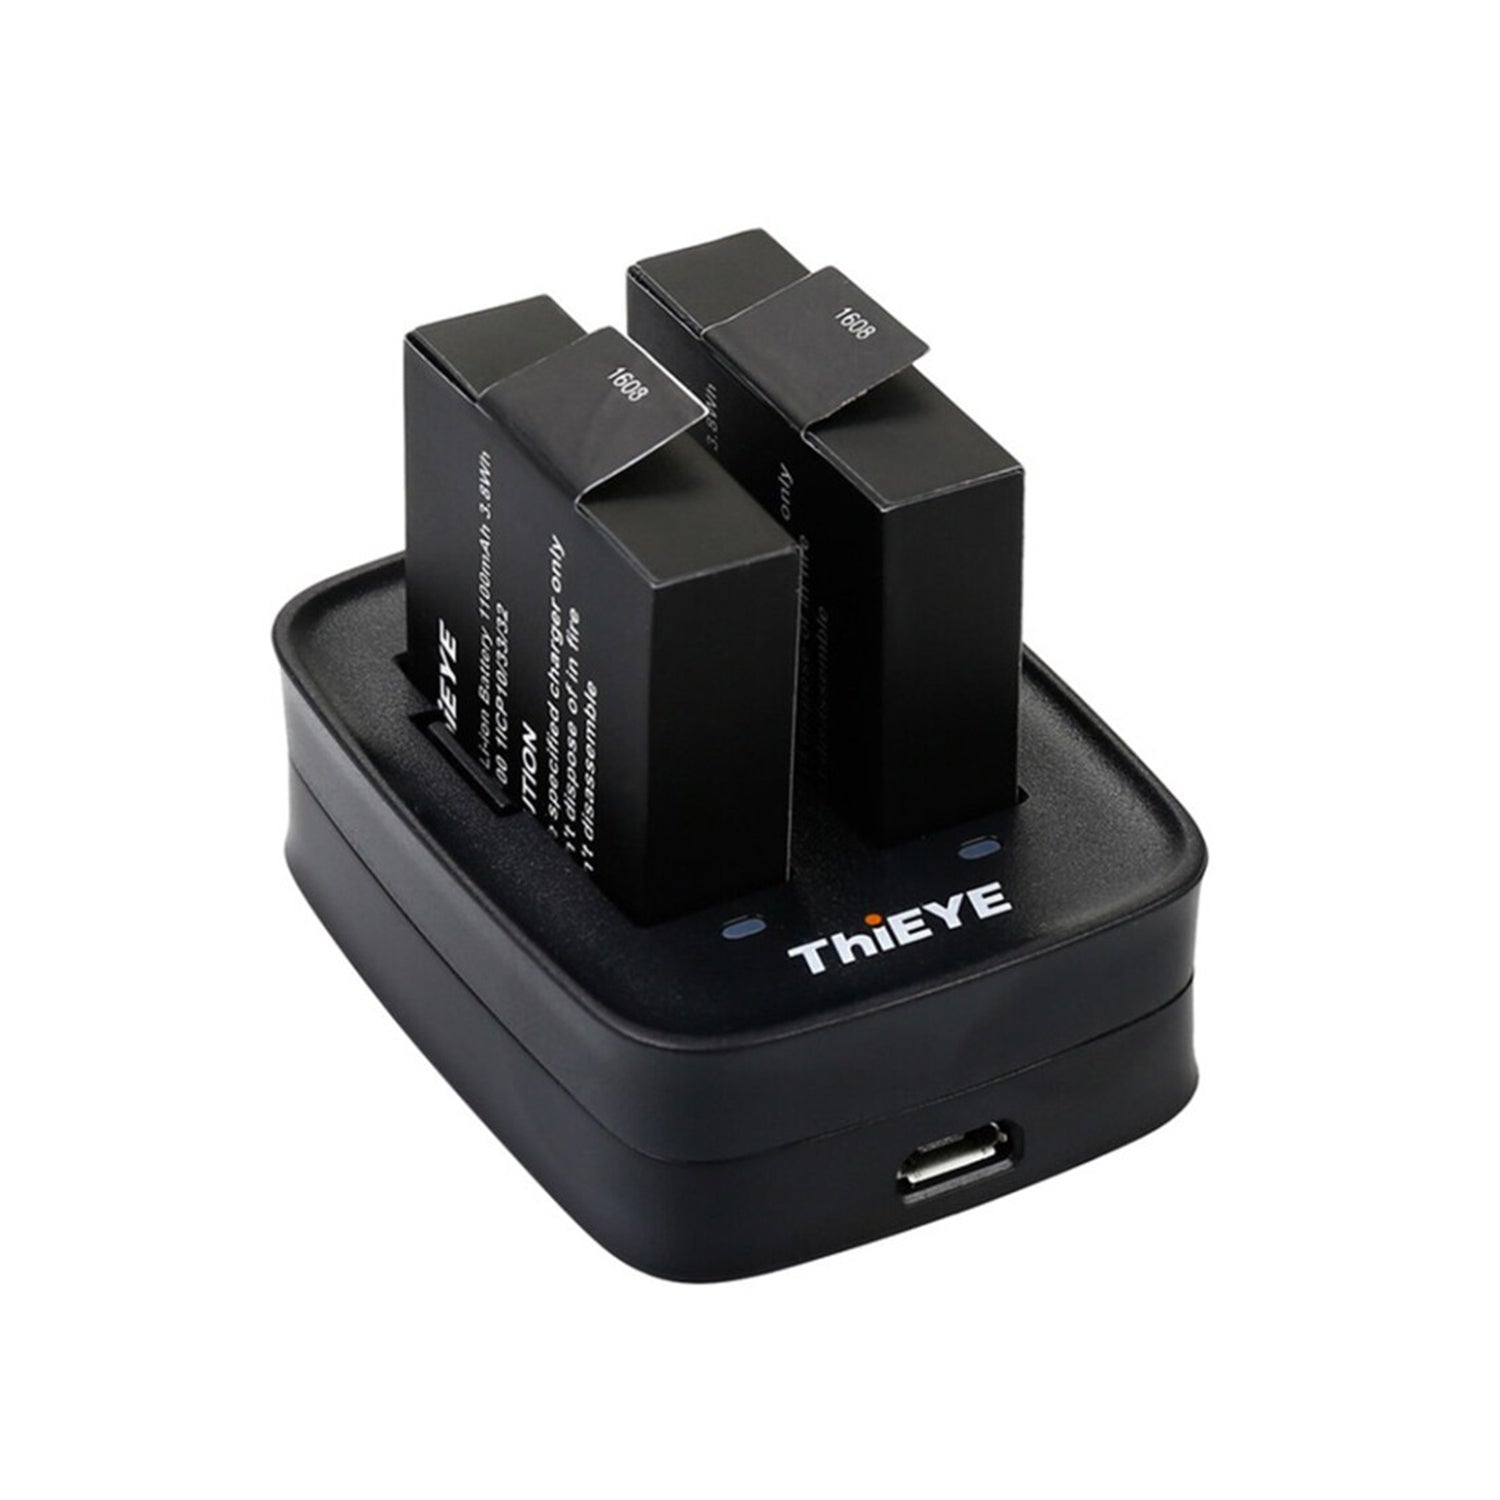 Thieye Dual Charging Battery for 1100 mAh battery